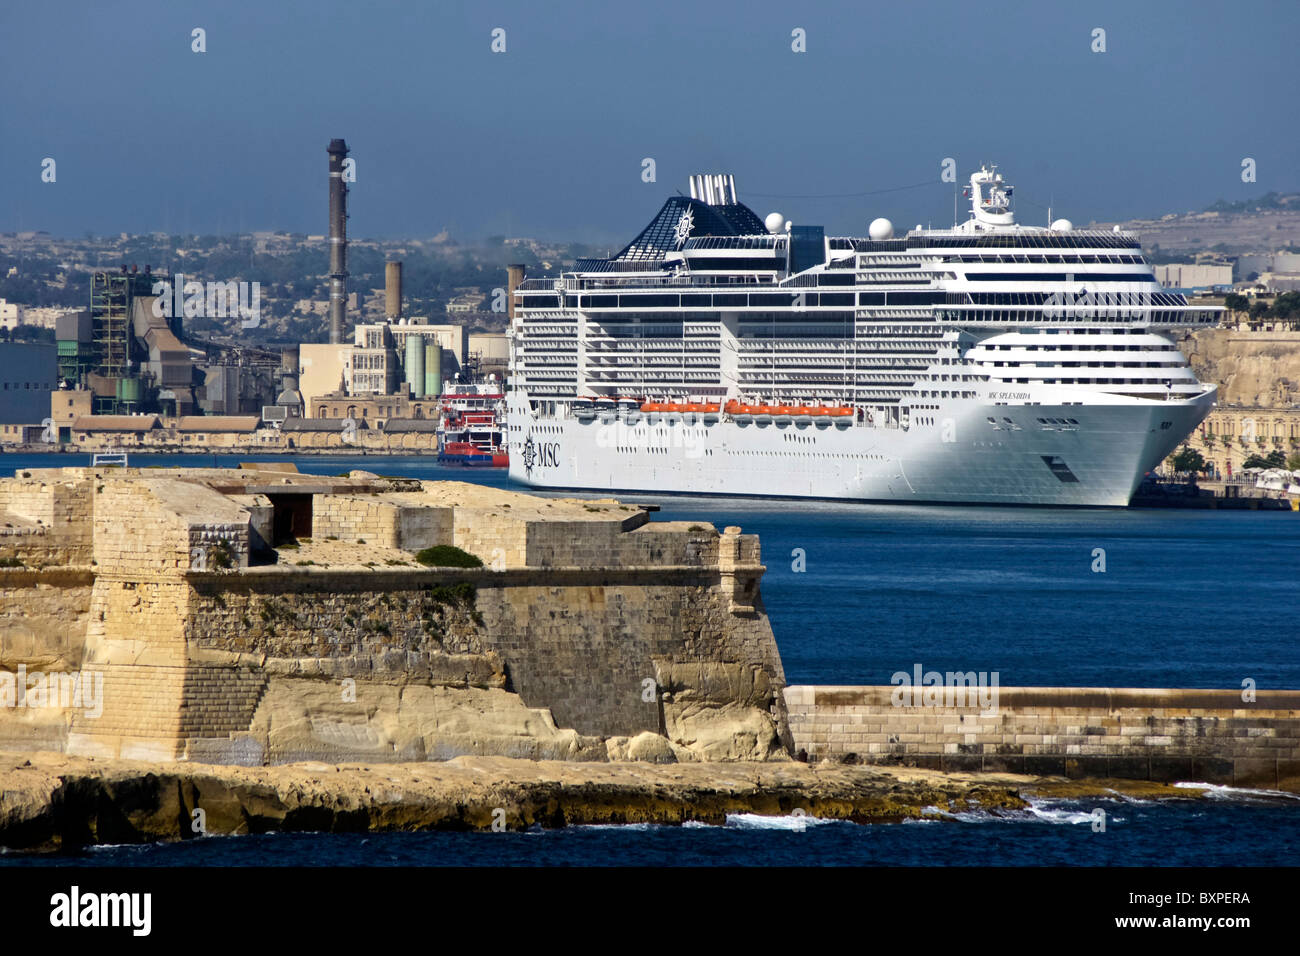 MSC Cruises cruise ship Splendida berthed in the Grand Harbour of Valletta in Malta Stock Photo